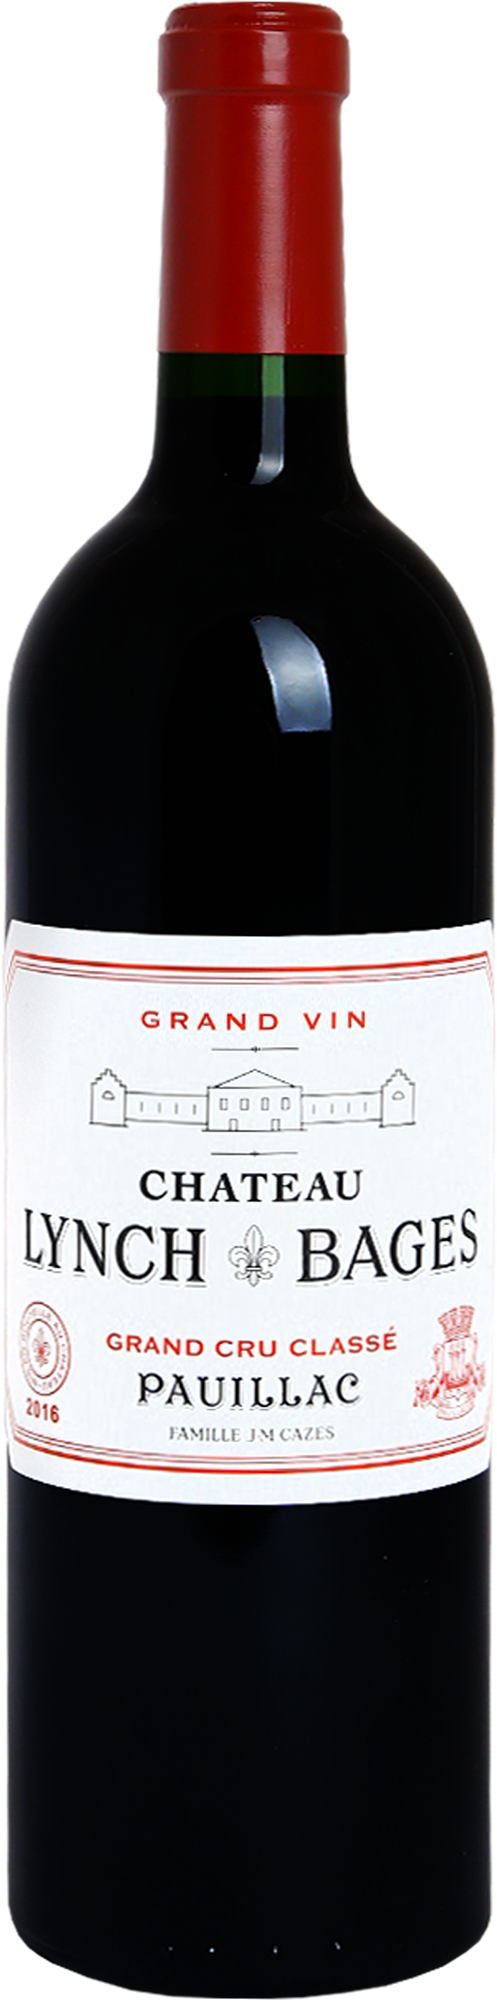 Chateau Lynch-Bages, Grand Cru Classe, 2016